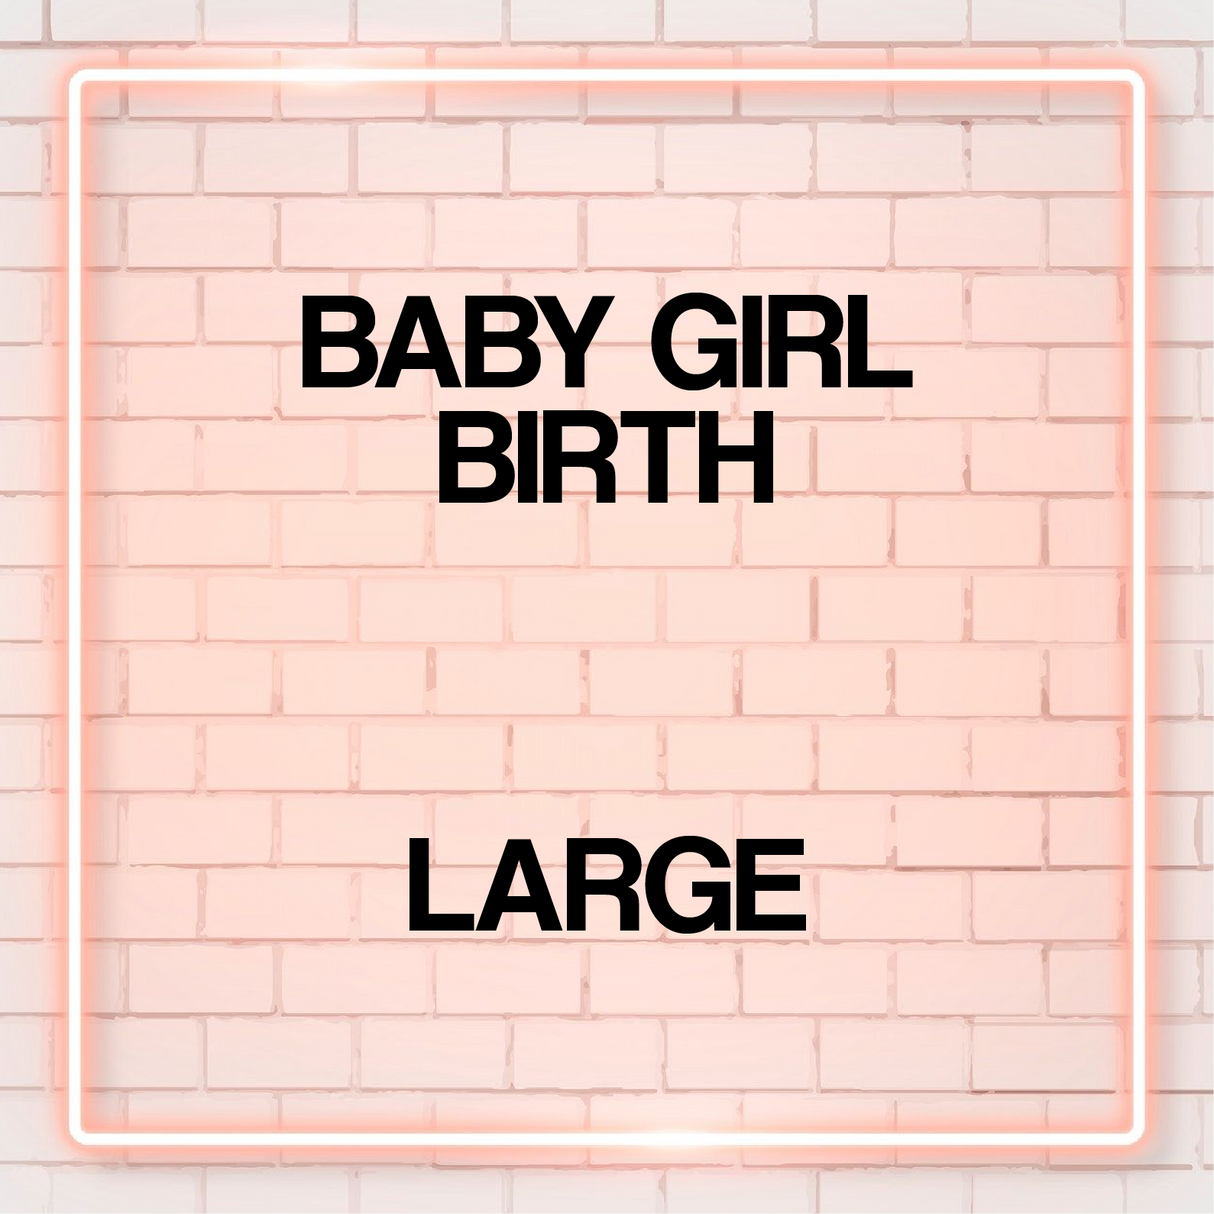 Birth - Baby Girl